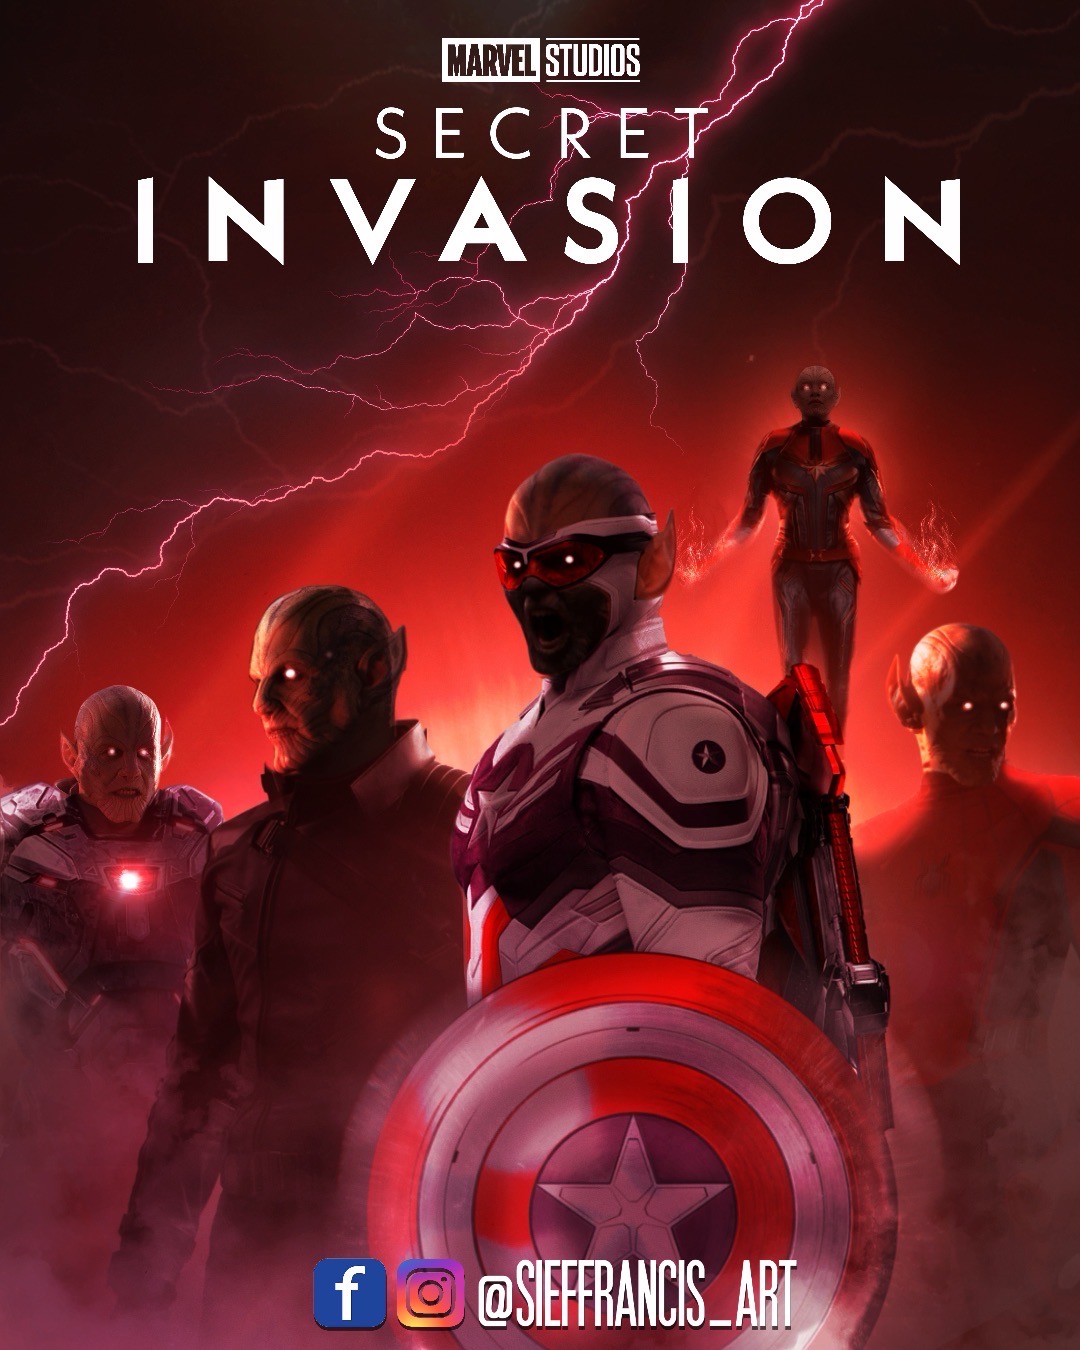 NOV082391 - SECRET INVASION POSTER BOOK - Previews World